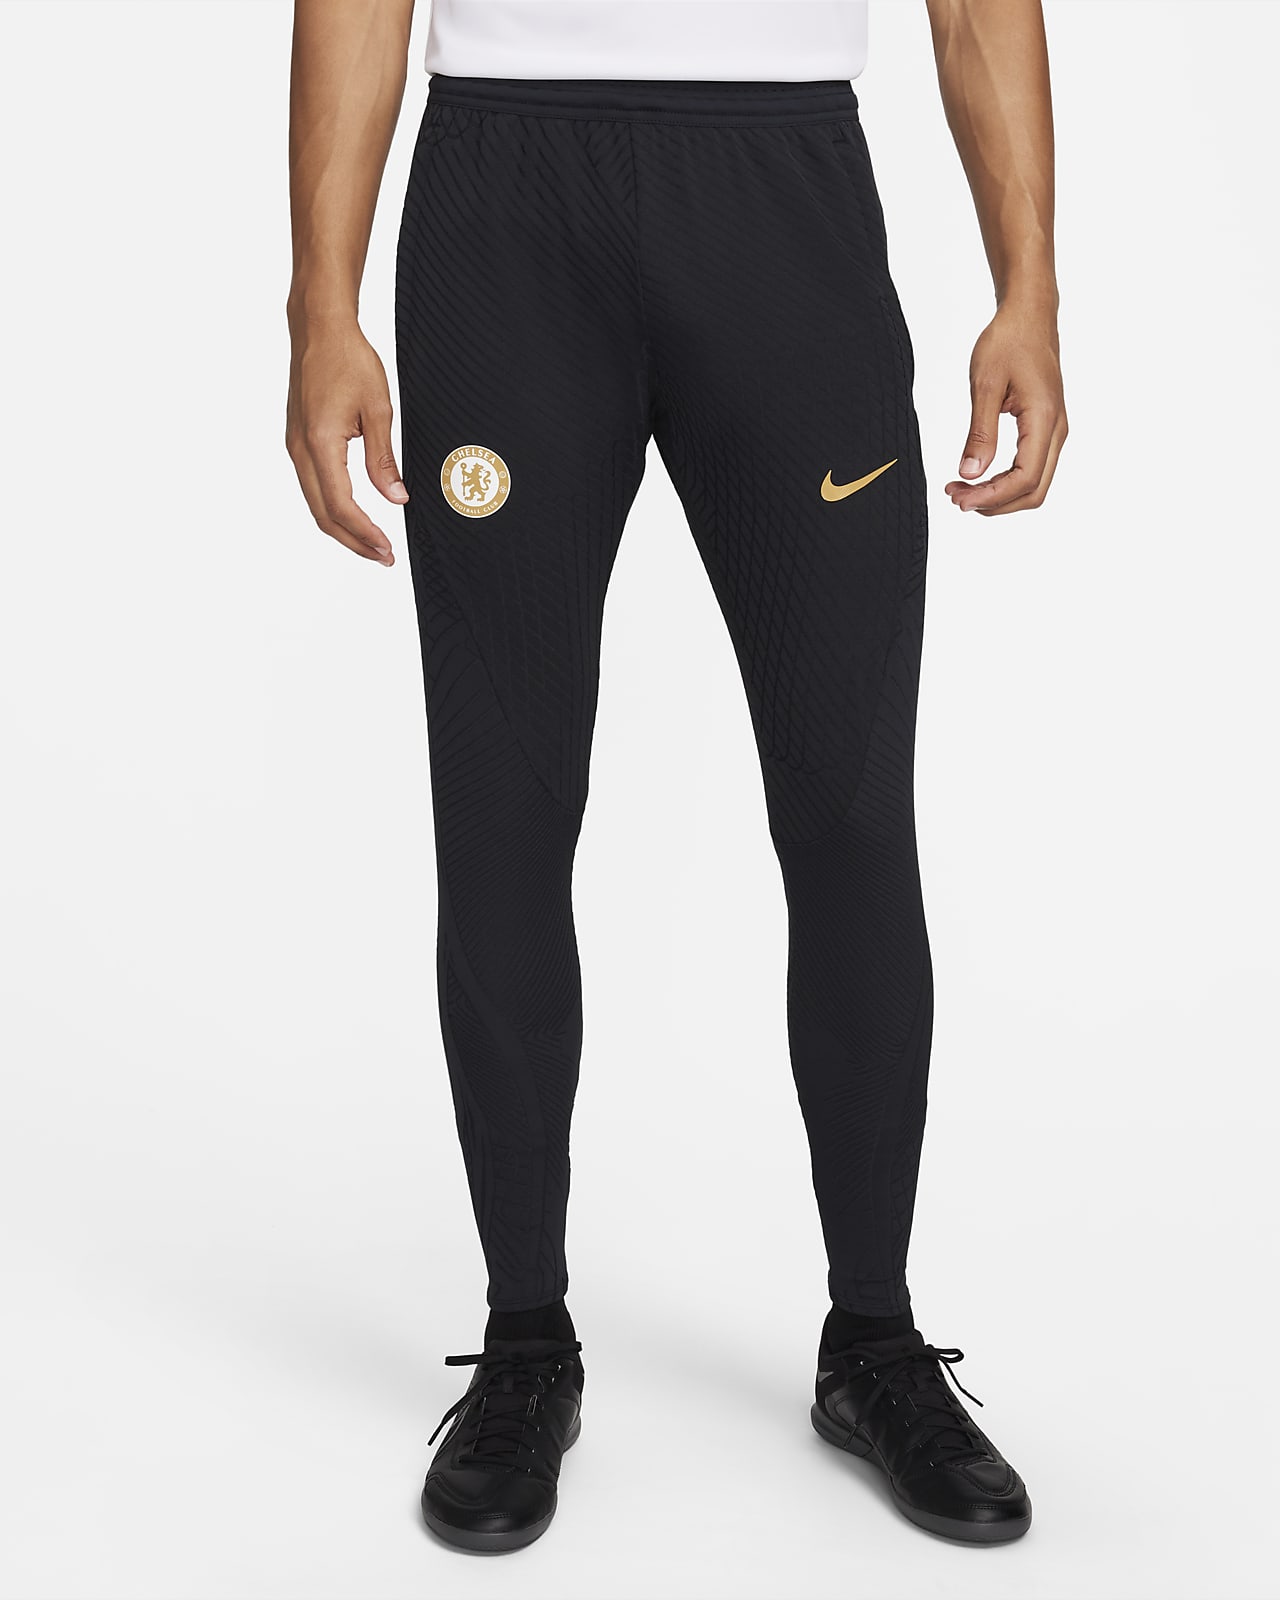 Chelsea F.C. Strike Elite Men's Nike Dri-FIT ADV Knit Football Pants